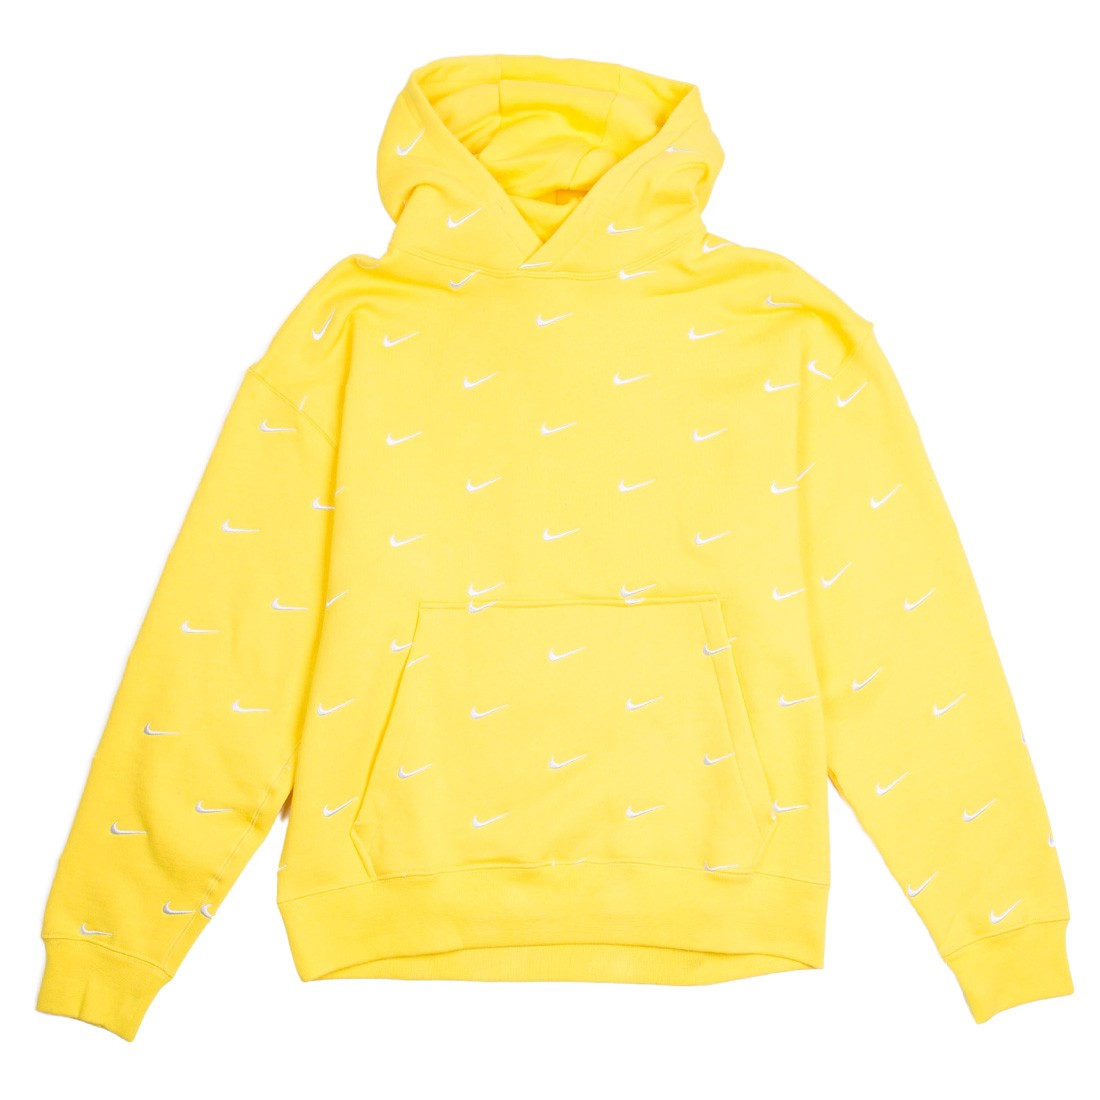 nike pullover hoodie yellow